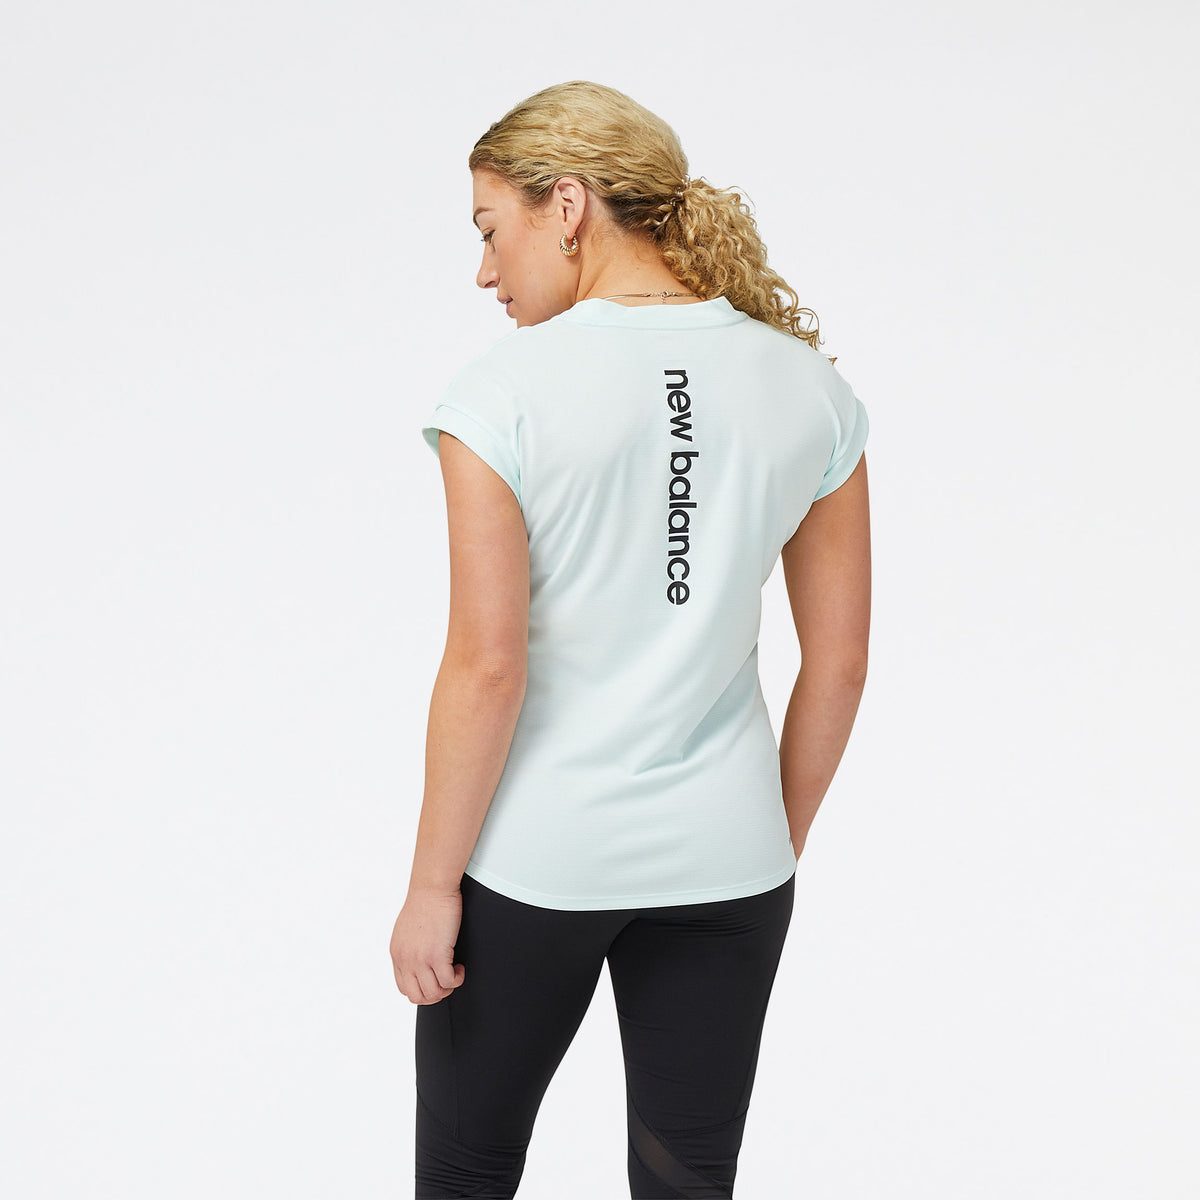 New Balance - Women's Impact Run T-Shirt (WT01234 SYR)